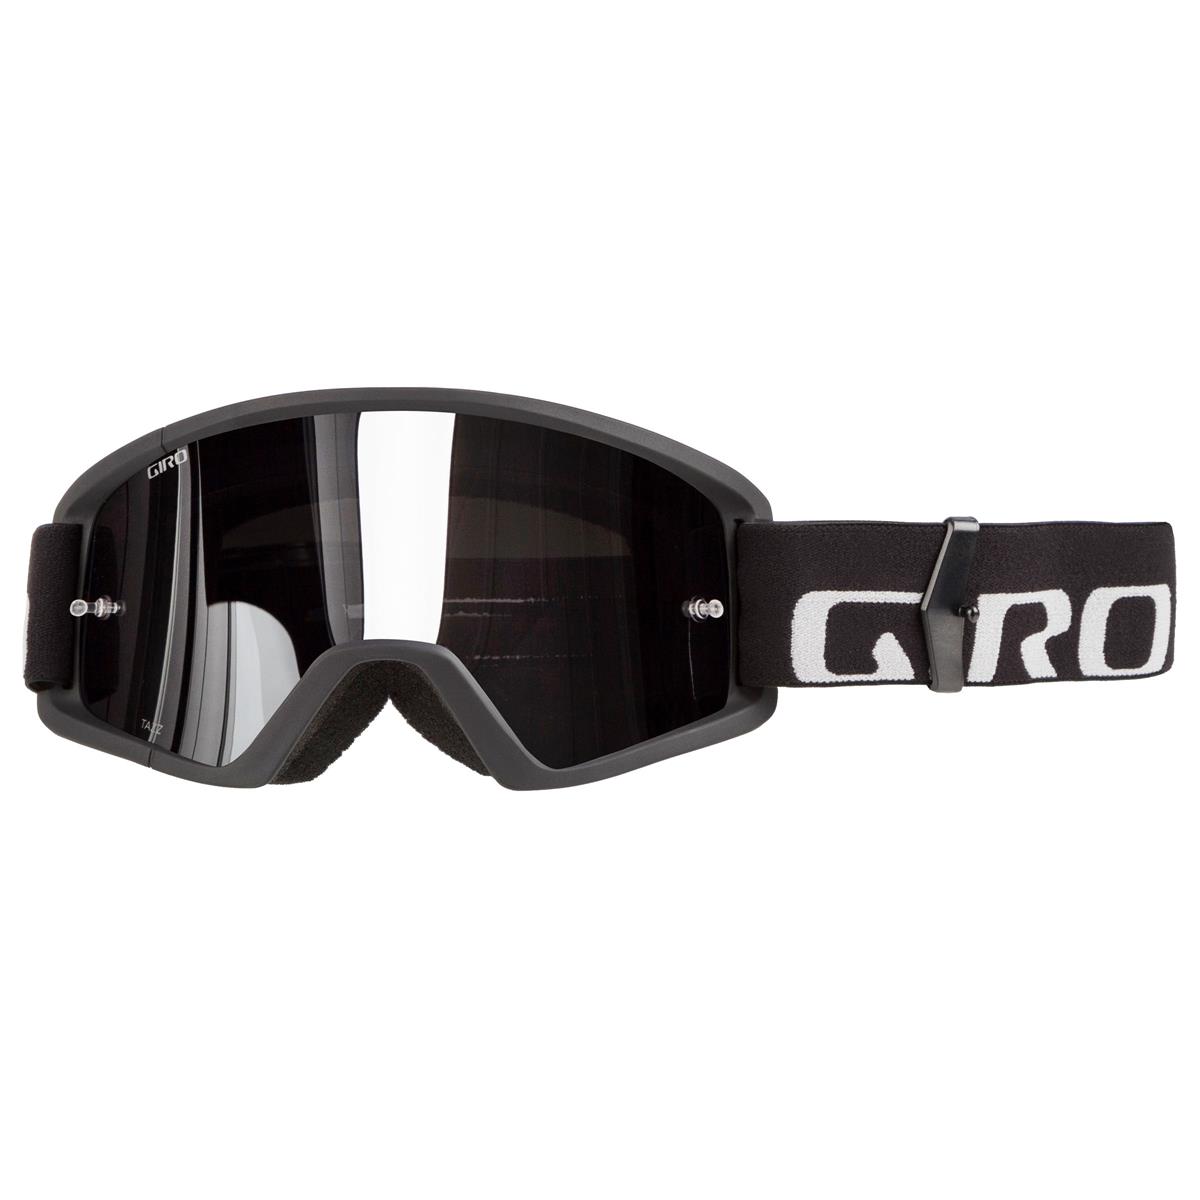 Giro Masque Tazz Black/White - Grey/Silver Flash Clear Anti-Fog